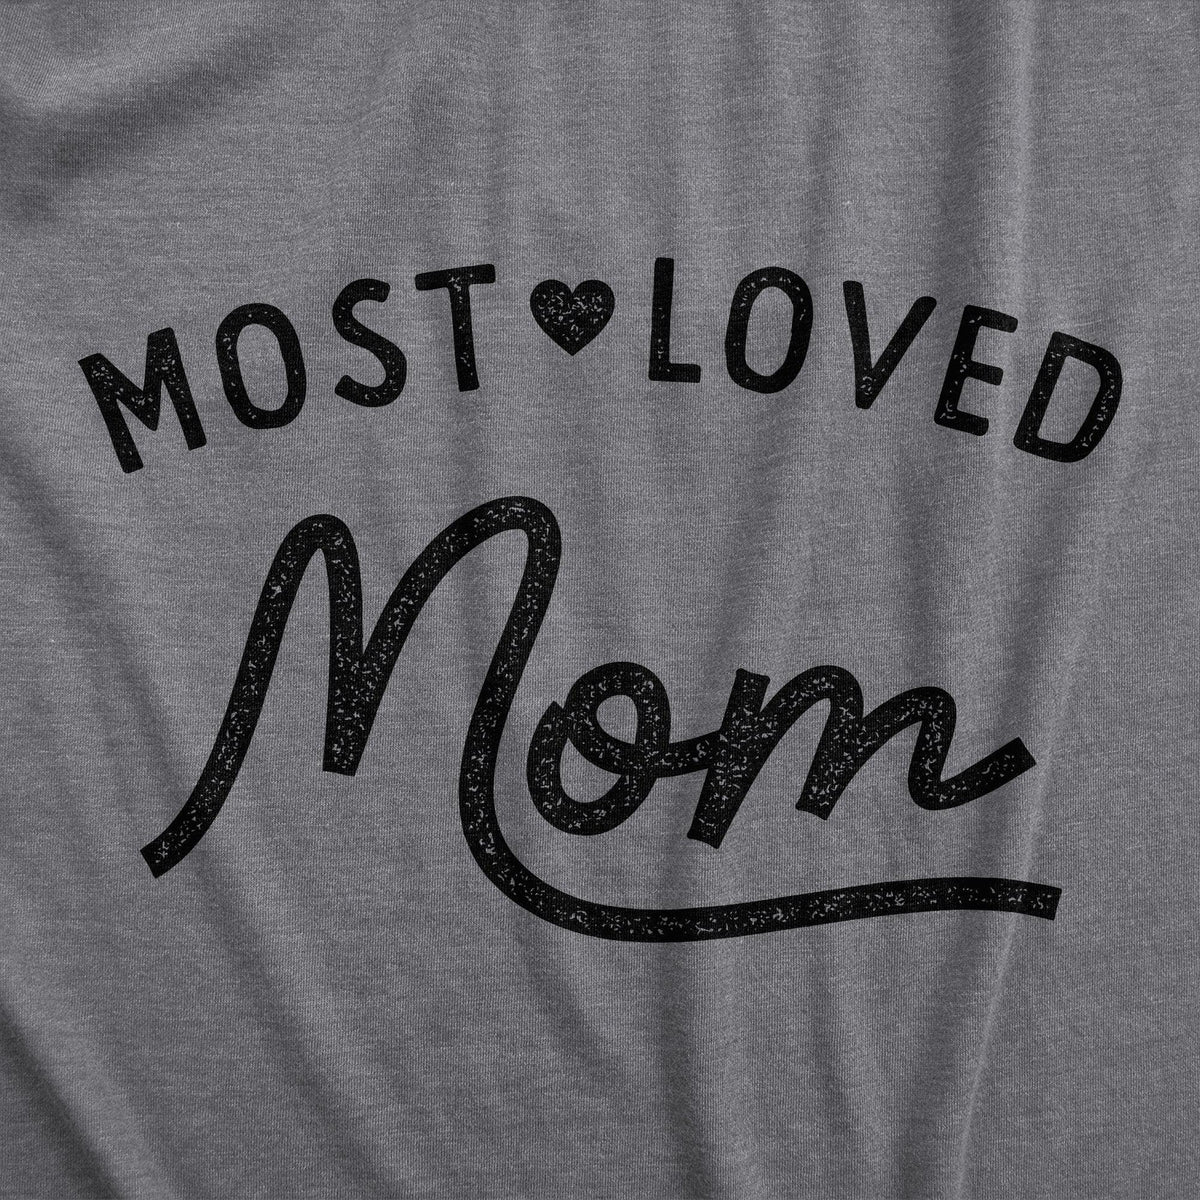 Most Loved Mom Women&#39;s Tshirt  -  Crazy Dog T-Shirts